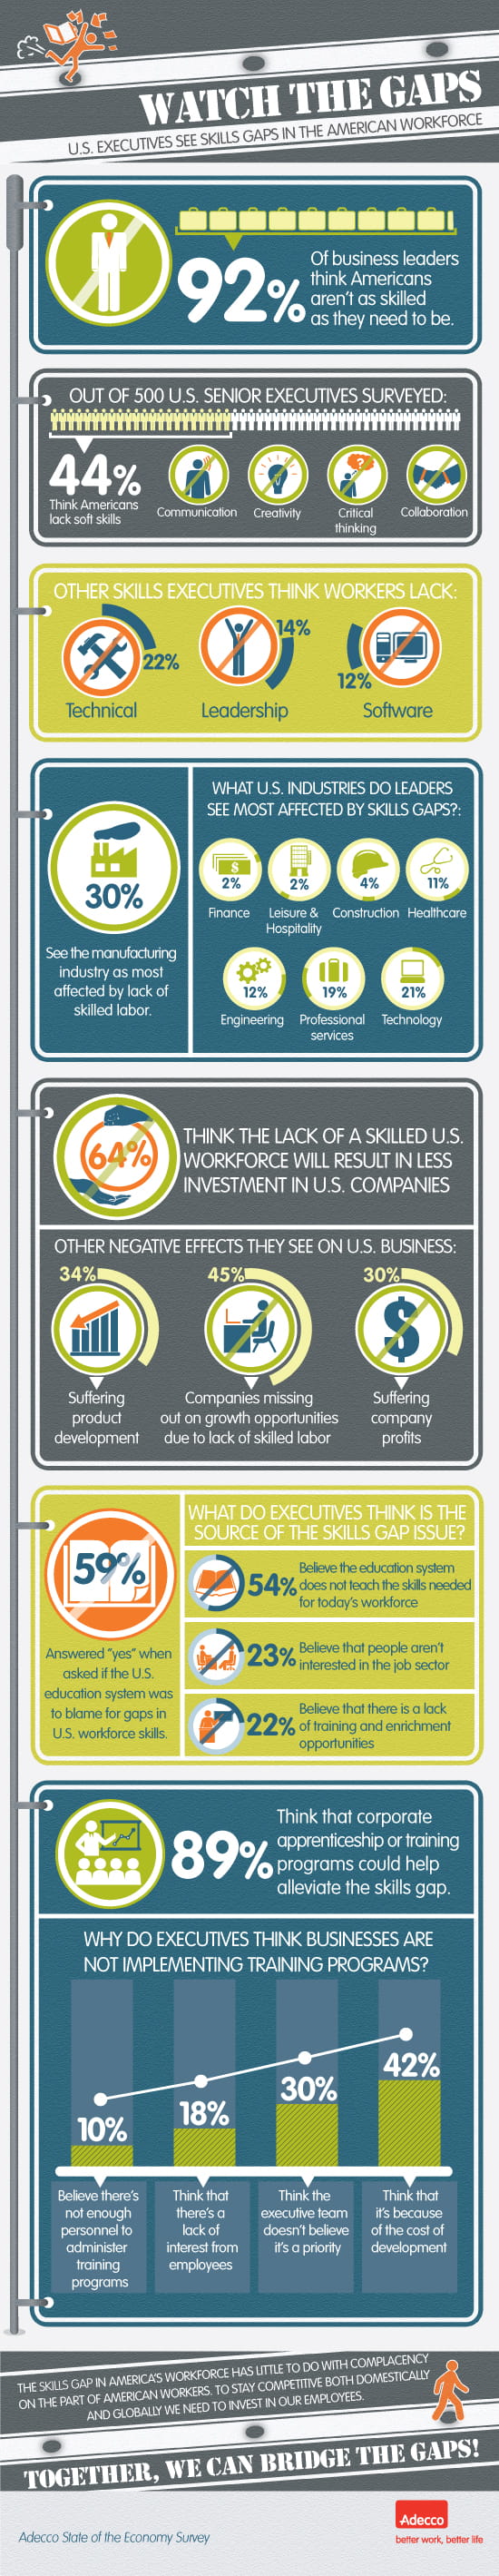 Infographic - skills gap in american workforce